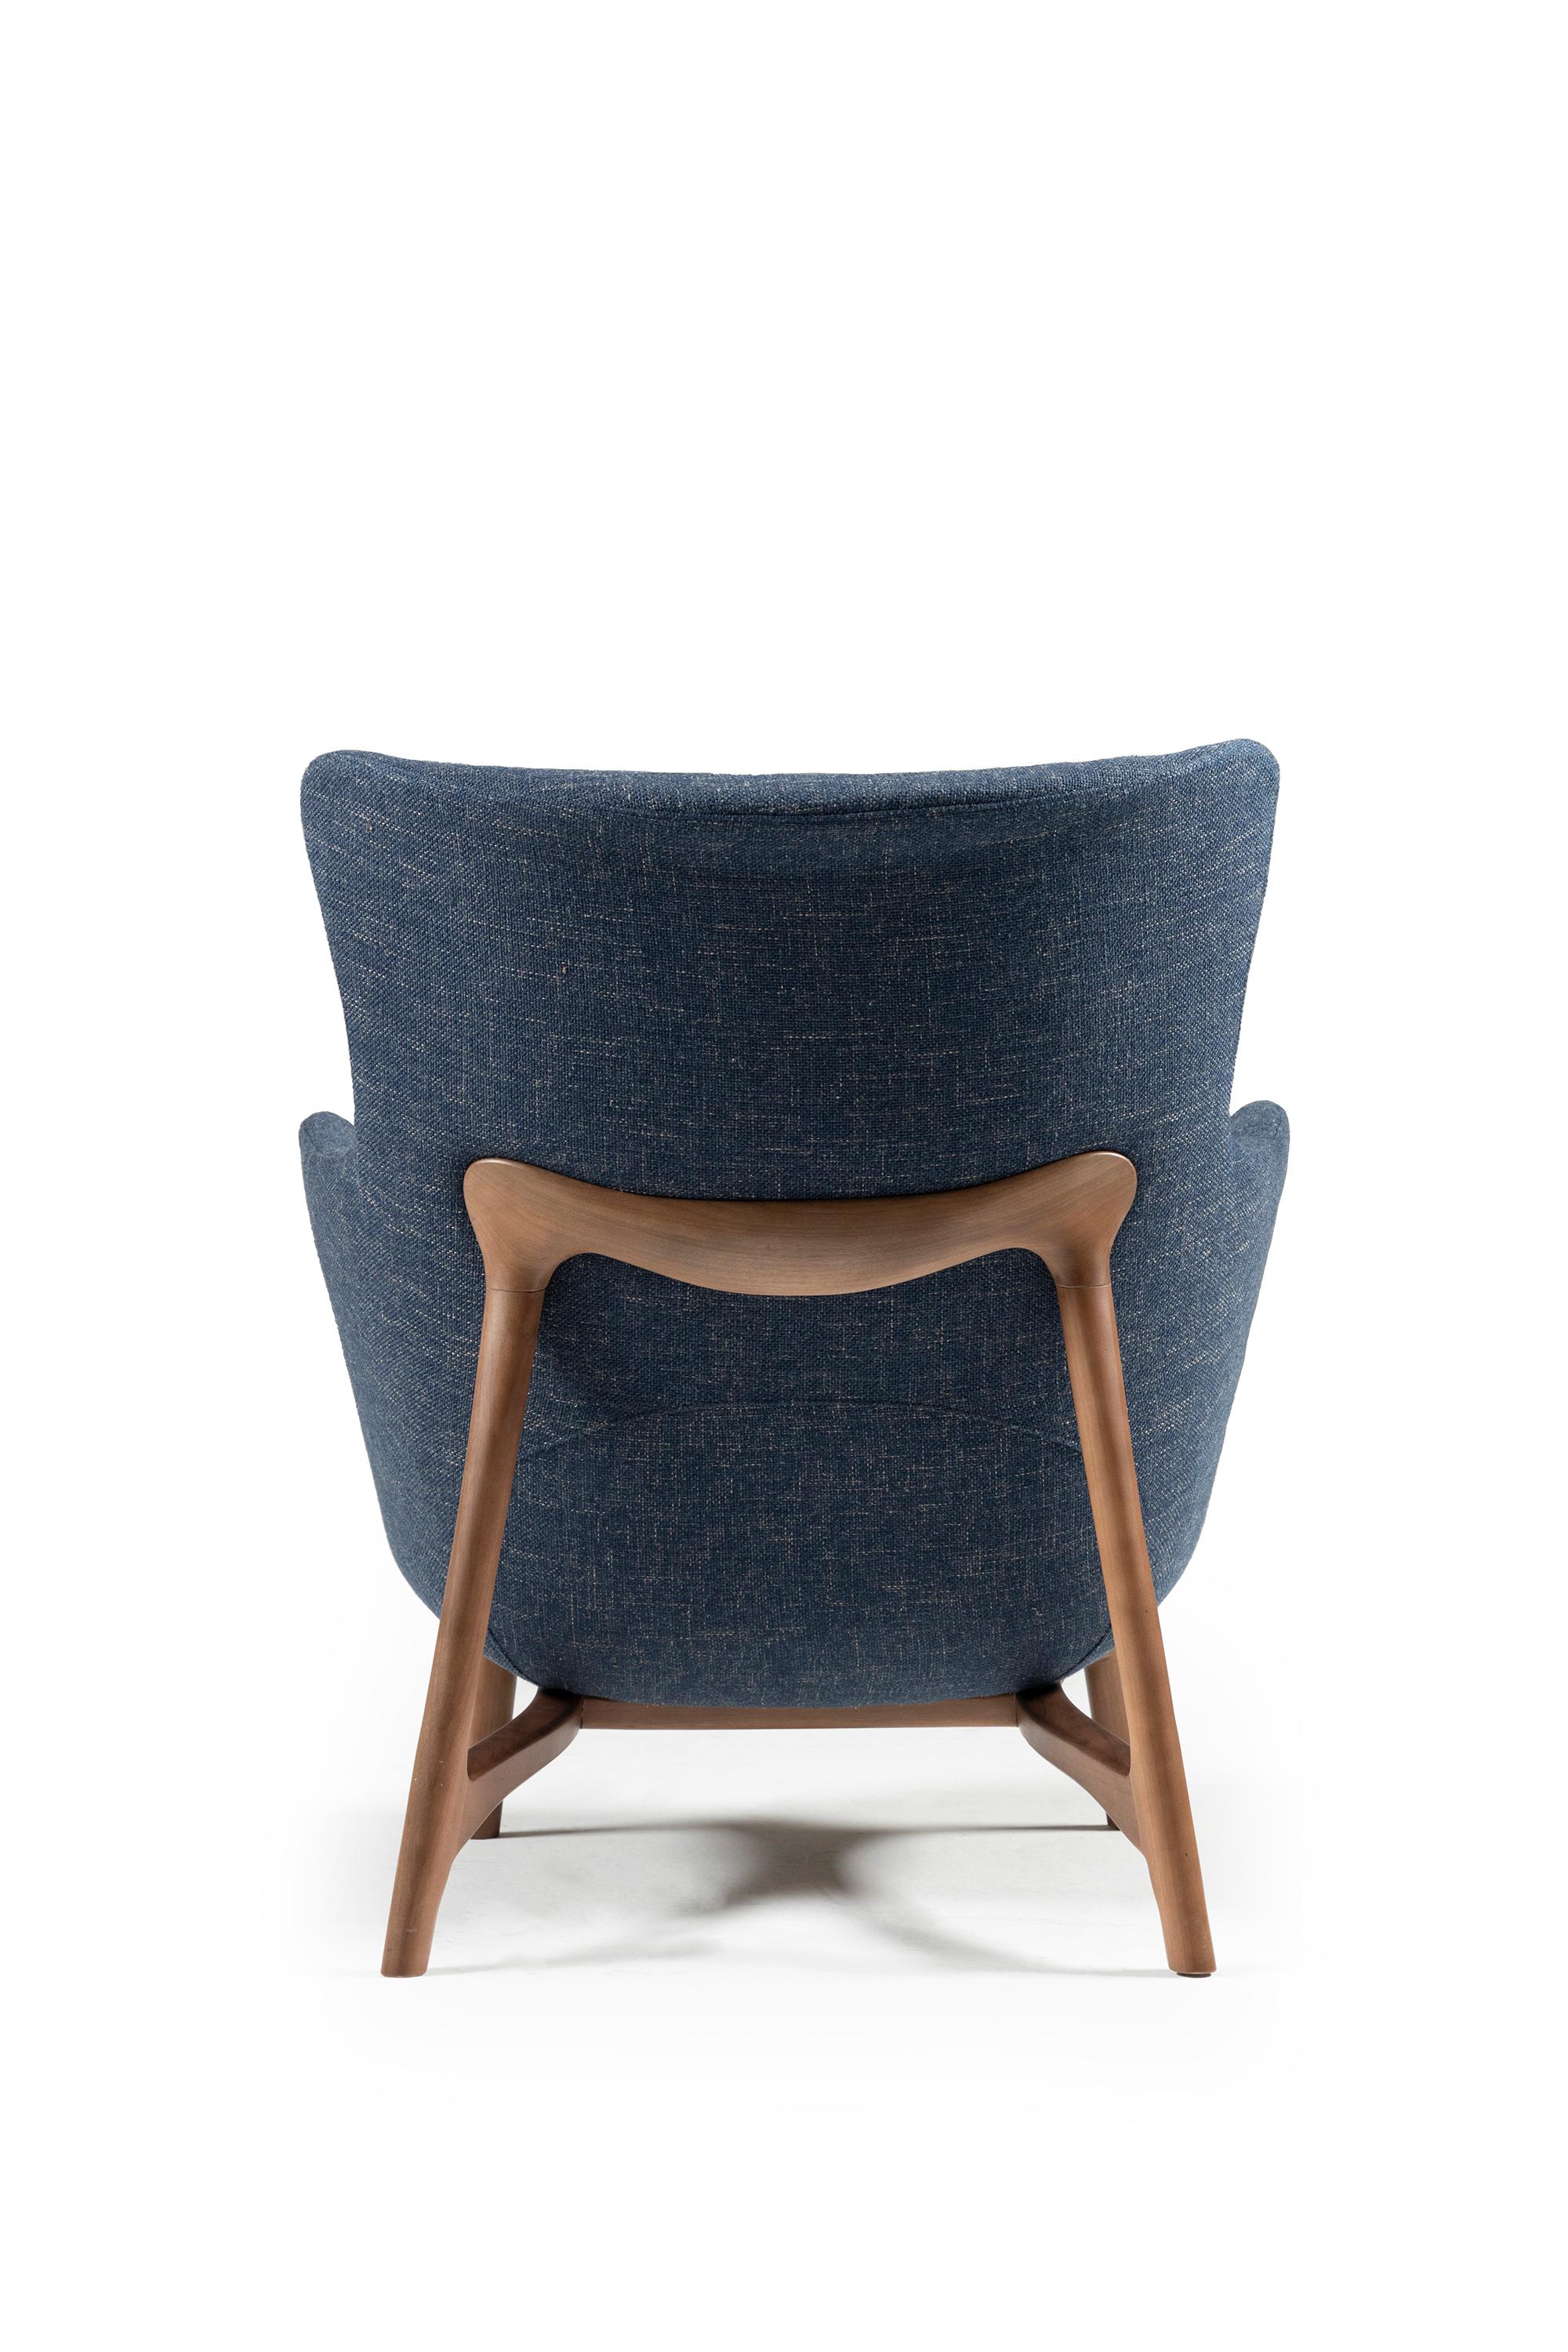 Sublime Sessel, Contemporary Style in Massivholz, Textilien Polsterung.  (Brasilianisch) im Angebot